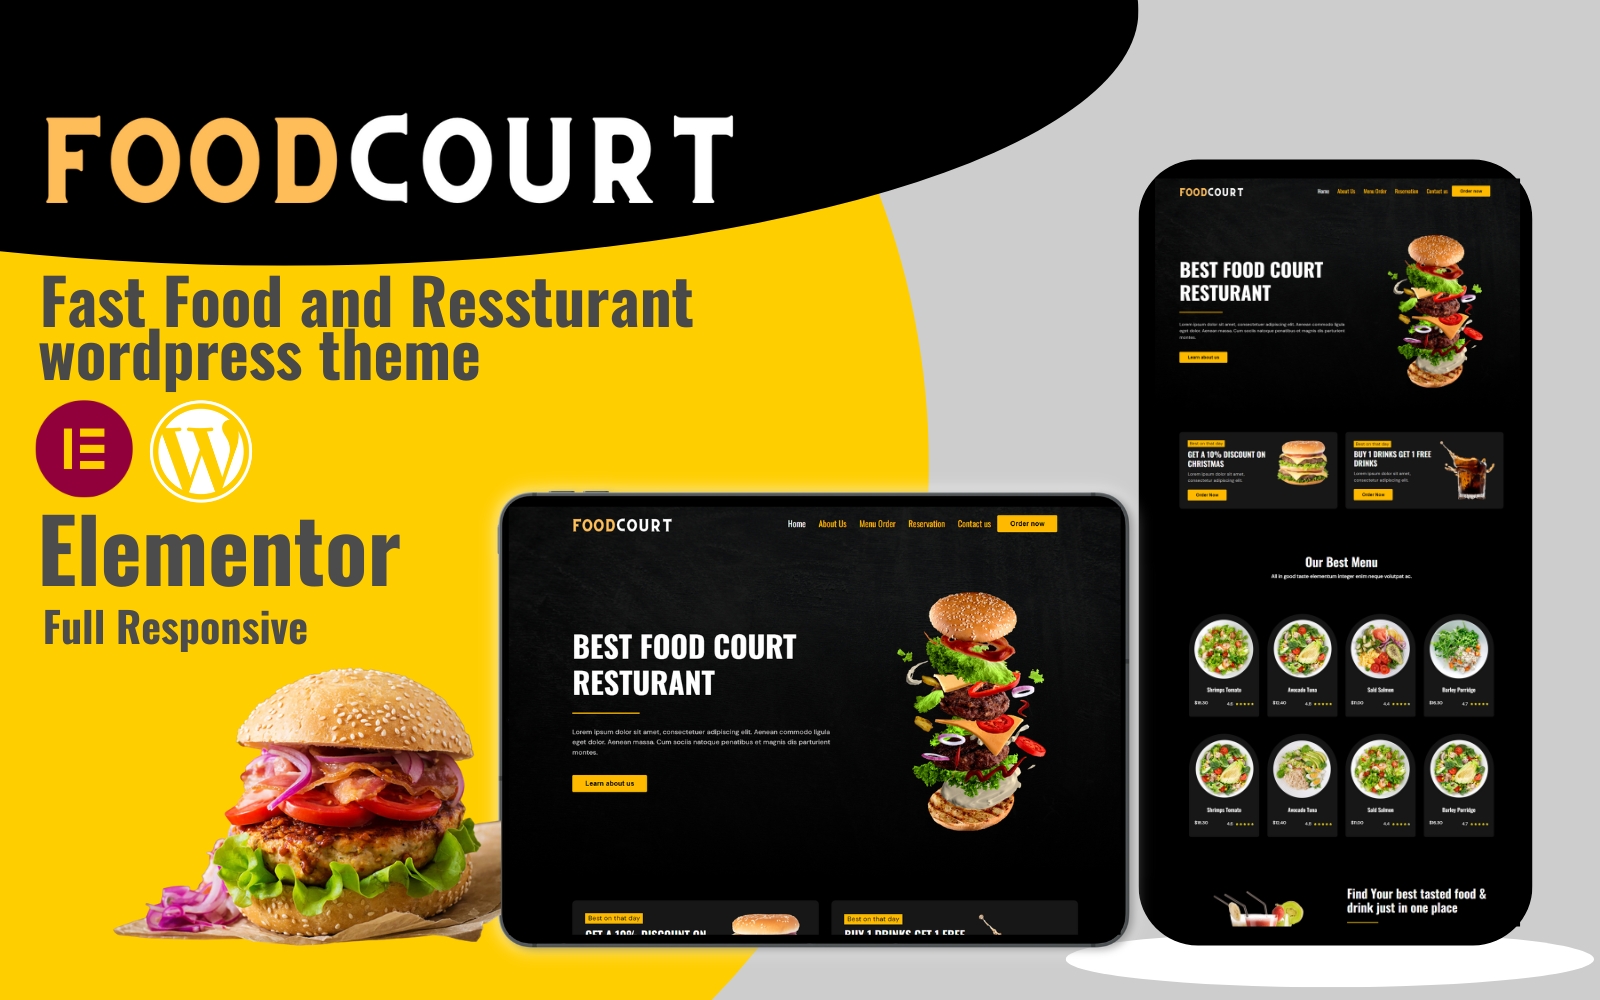 Foodcourt - Fast food & Restaurants WordPress theme